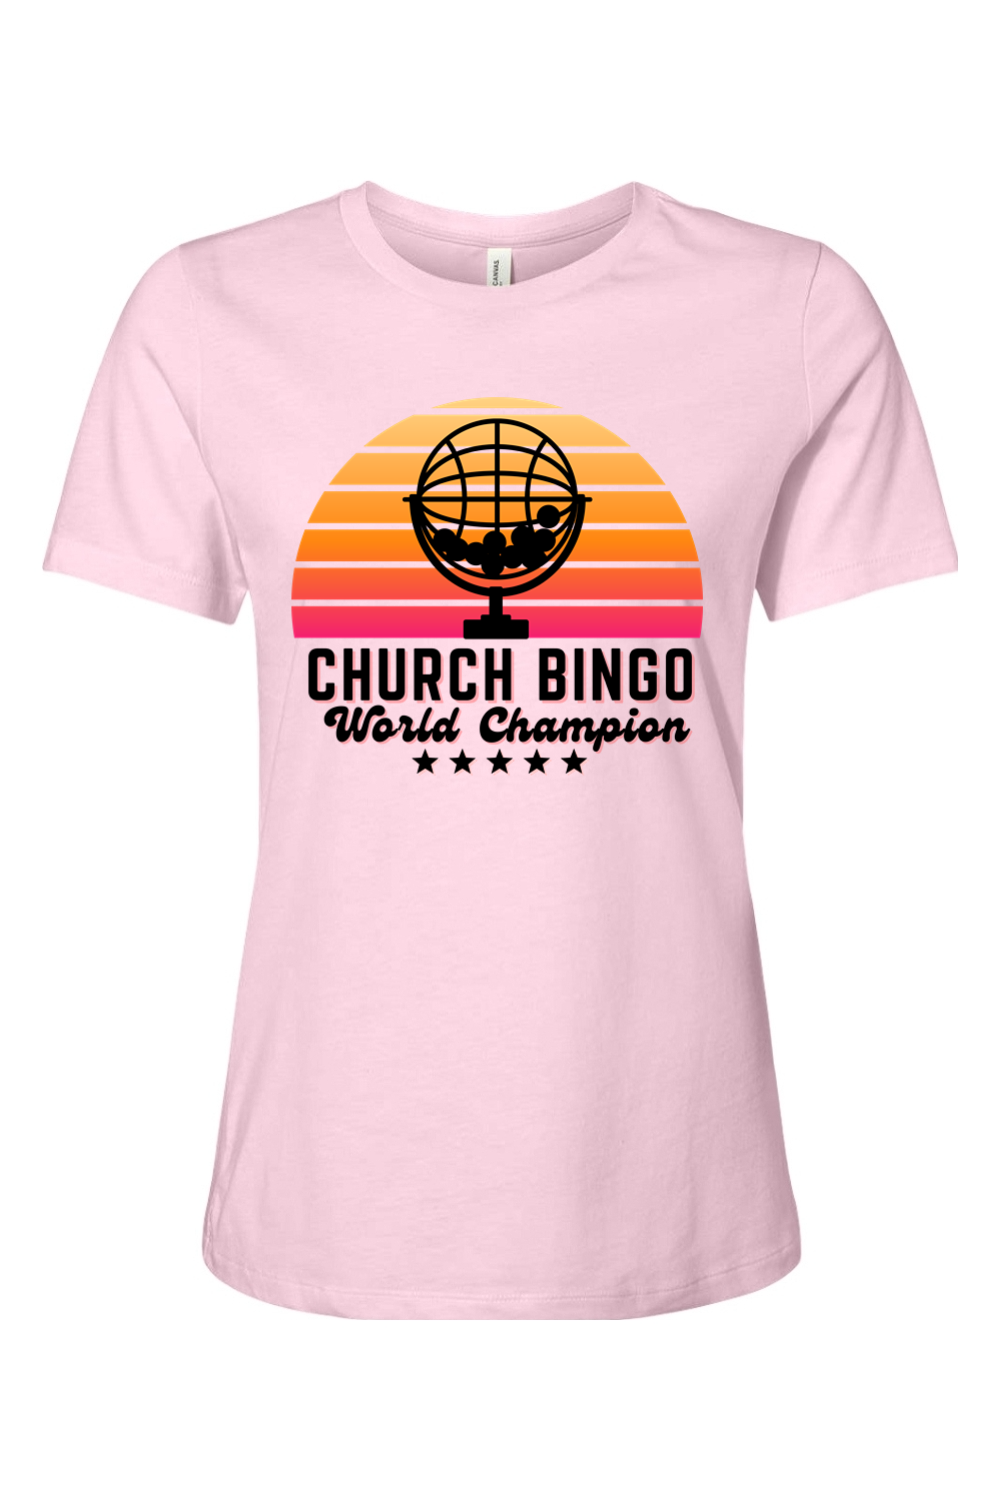 Church Bingo World Champion - Ladies Tee